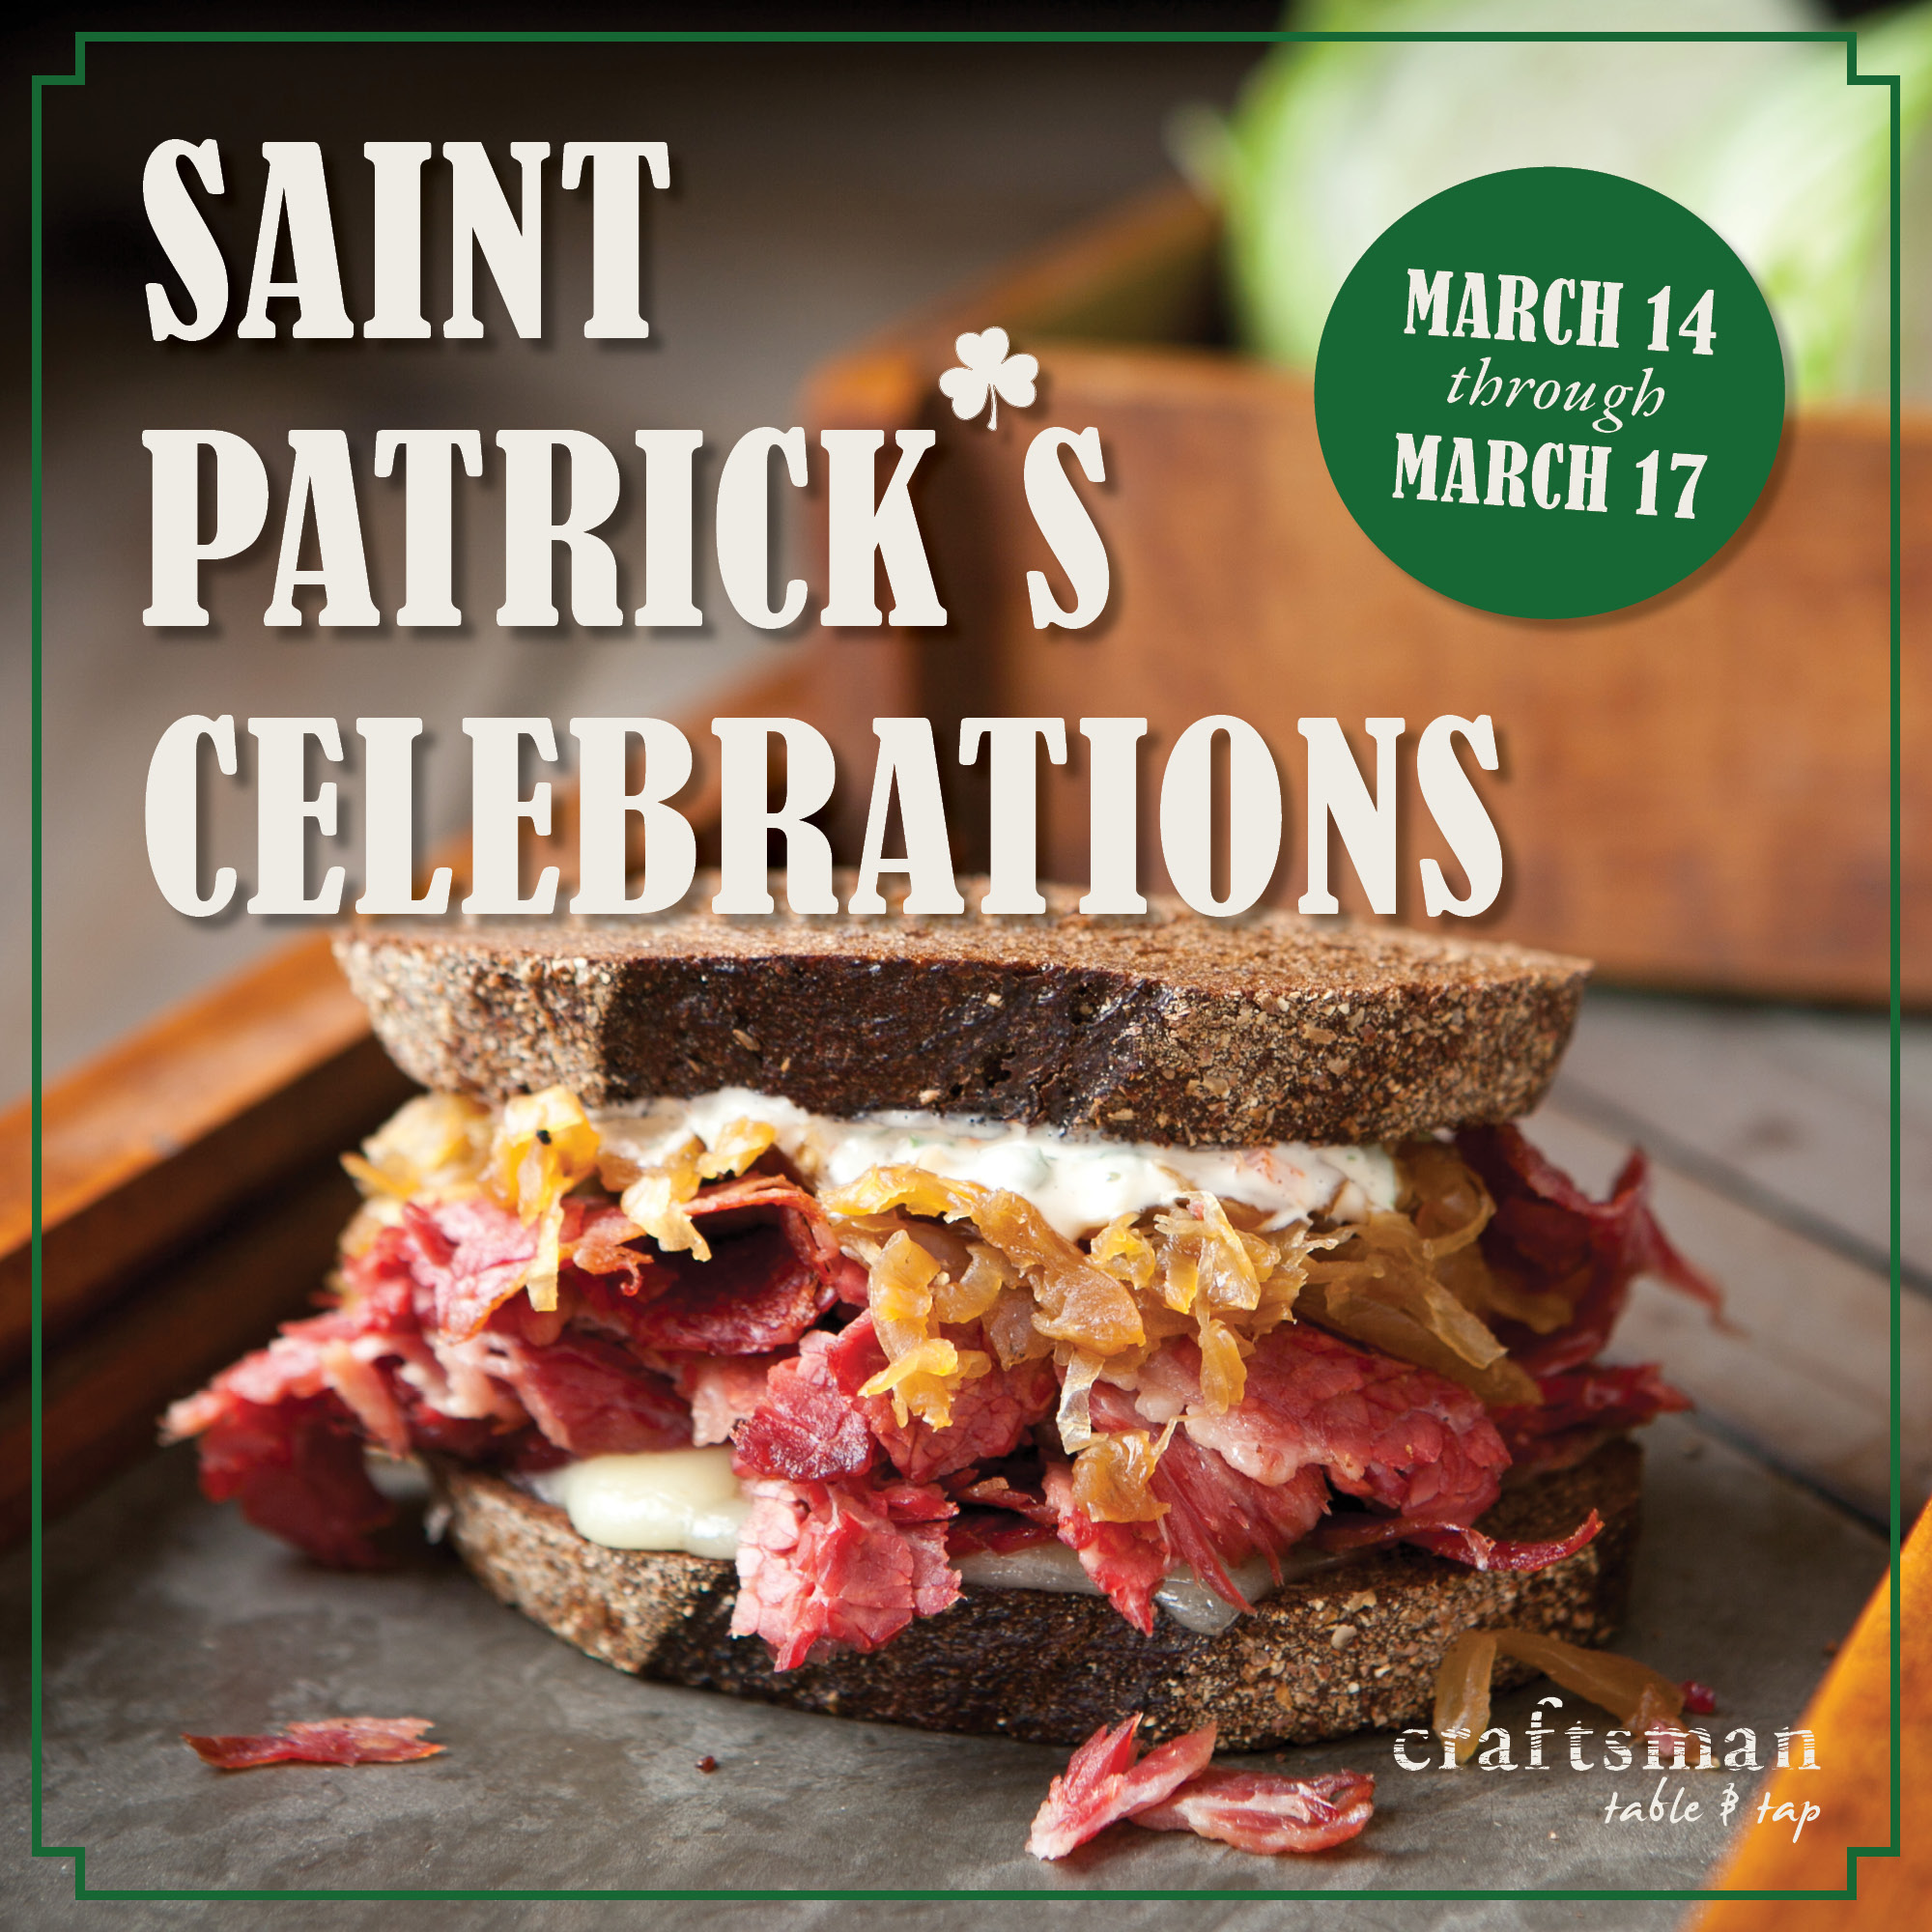 A sandwich with the words saint patrick's celebrations.